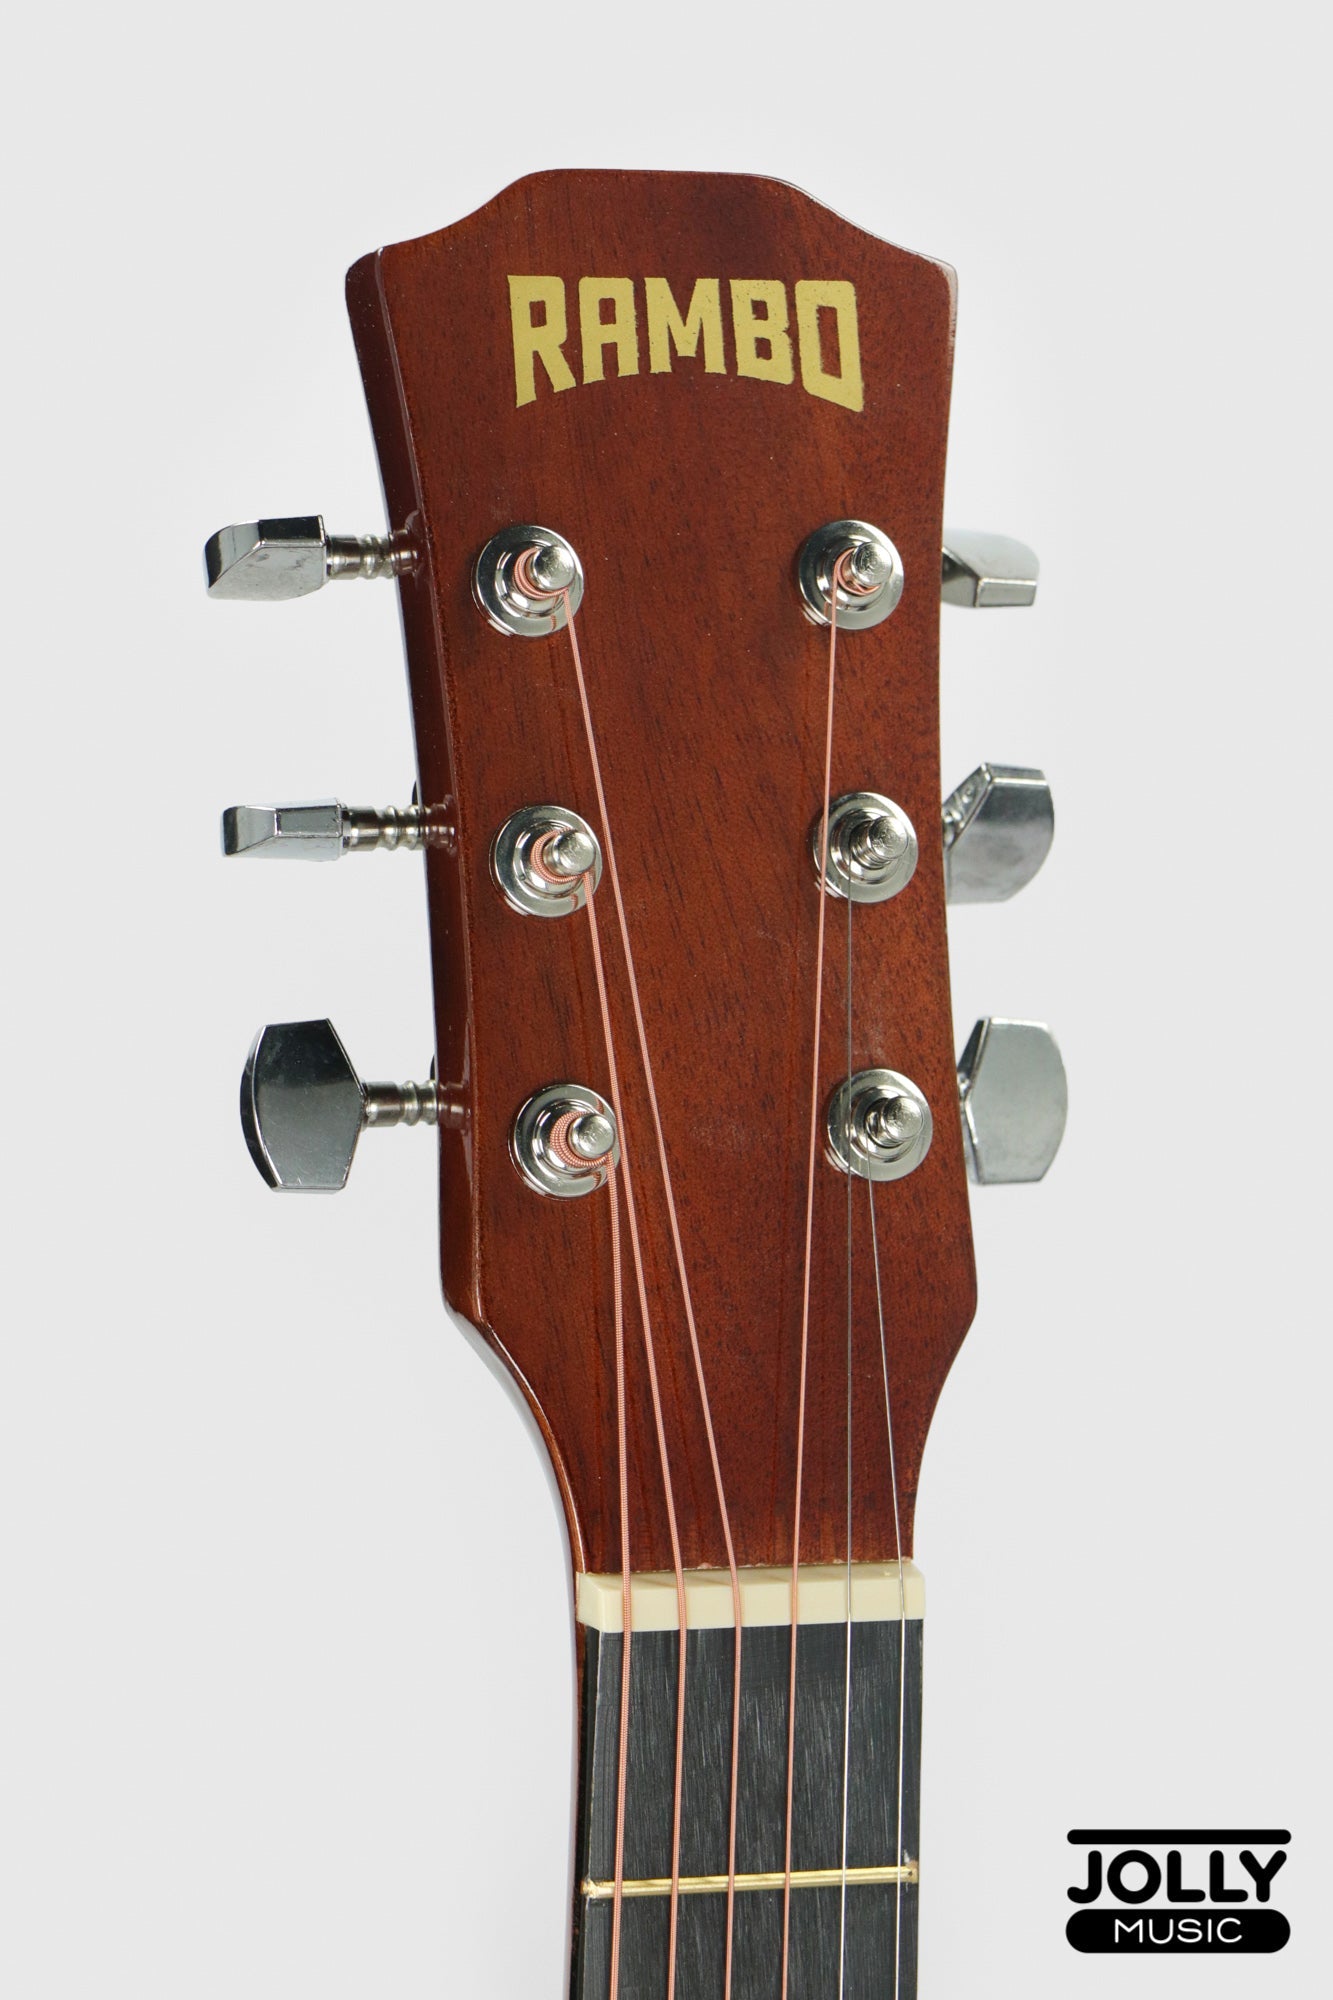 Rambo 38" Guitar K-38LT Truss Rod w/ Case, 3 Picks, Tuner, Capo - Brown